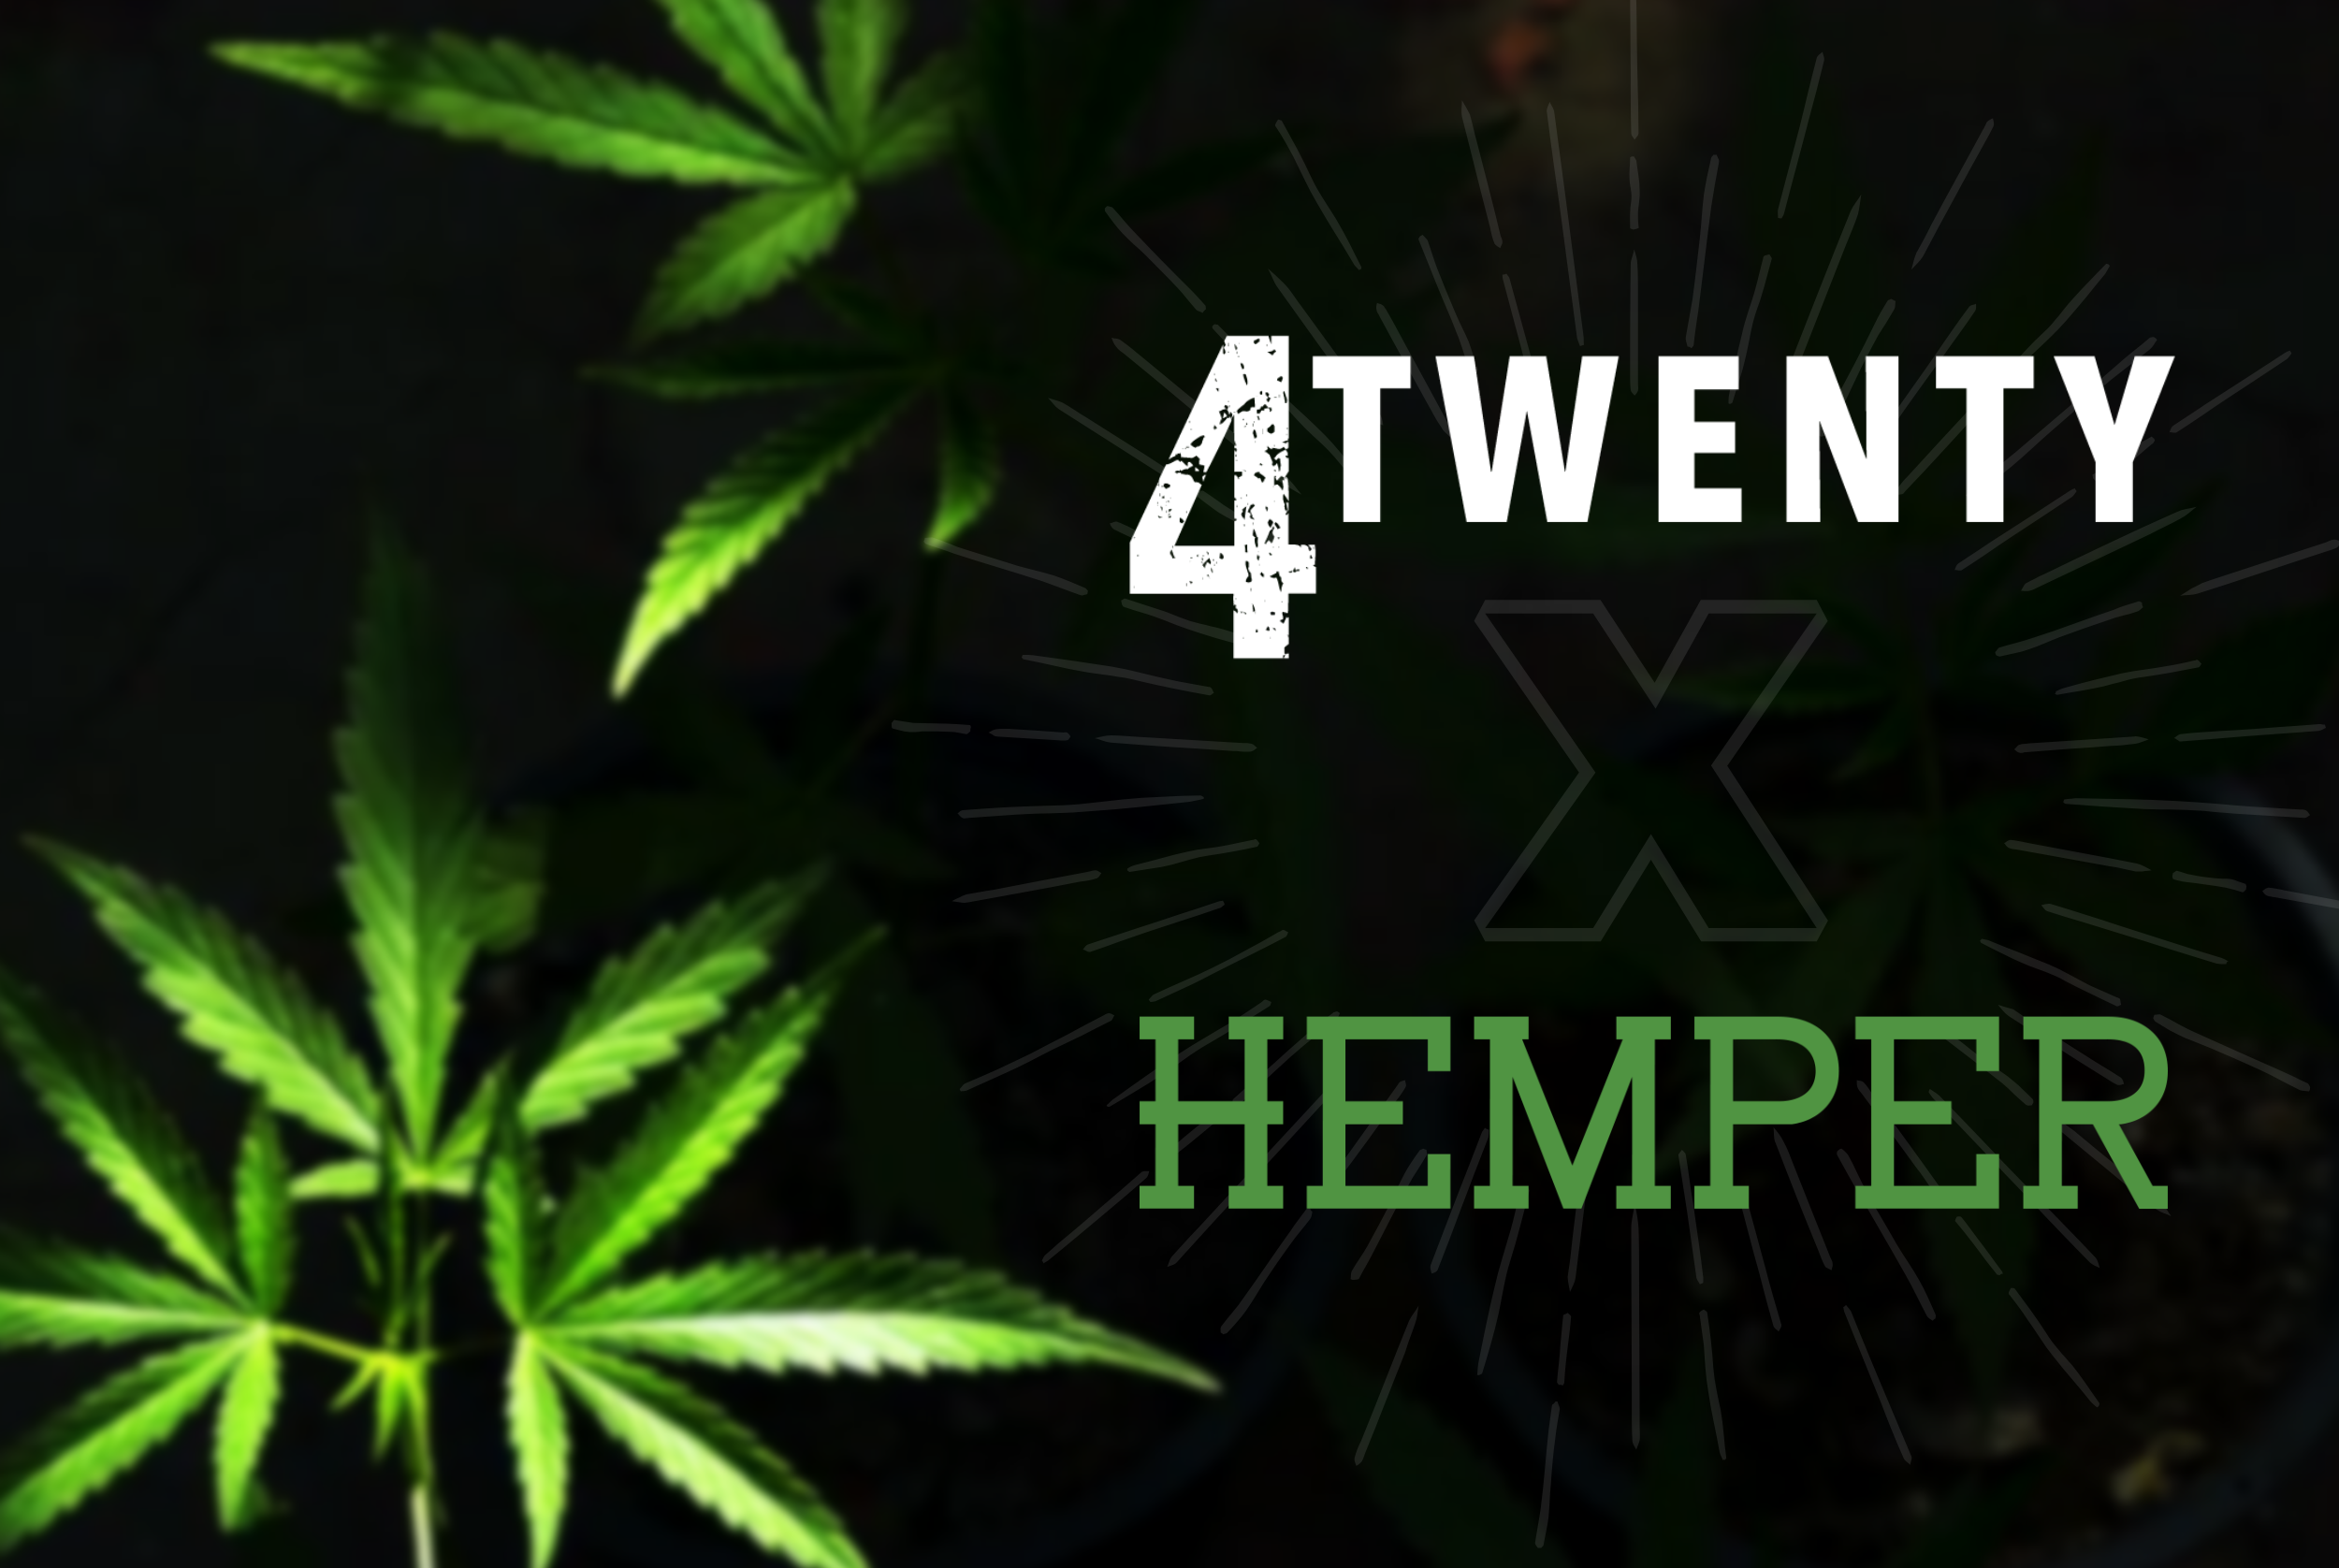 hemper-4twenty-3